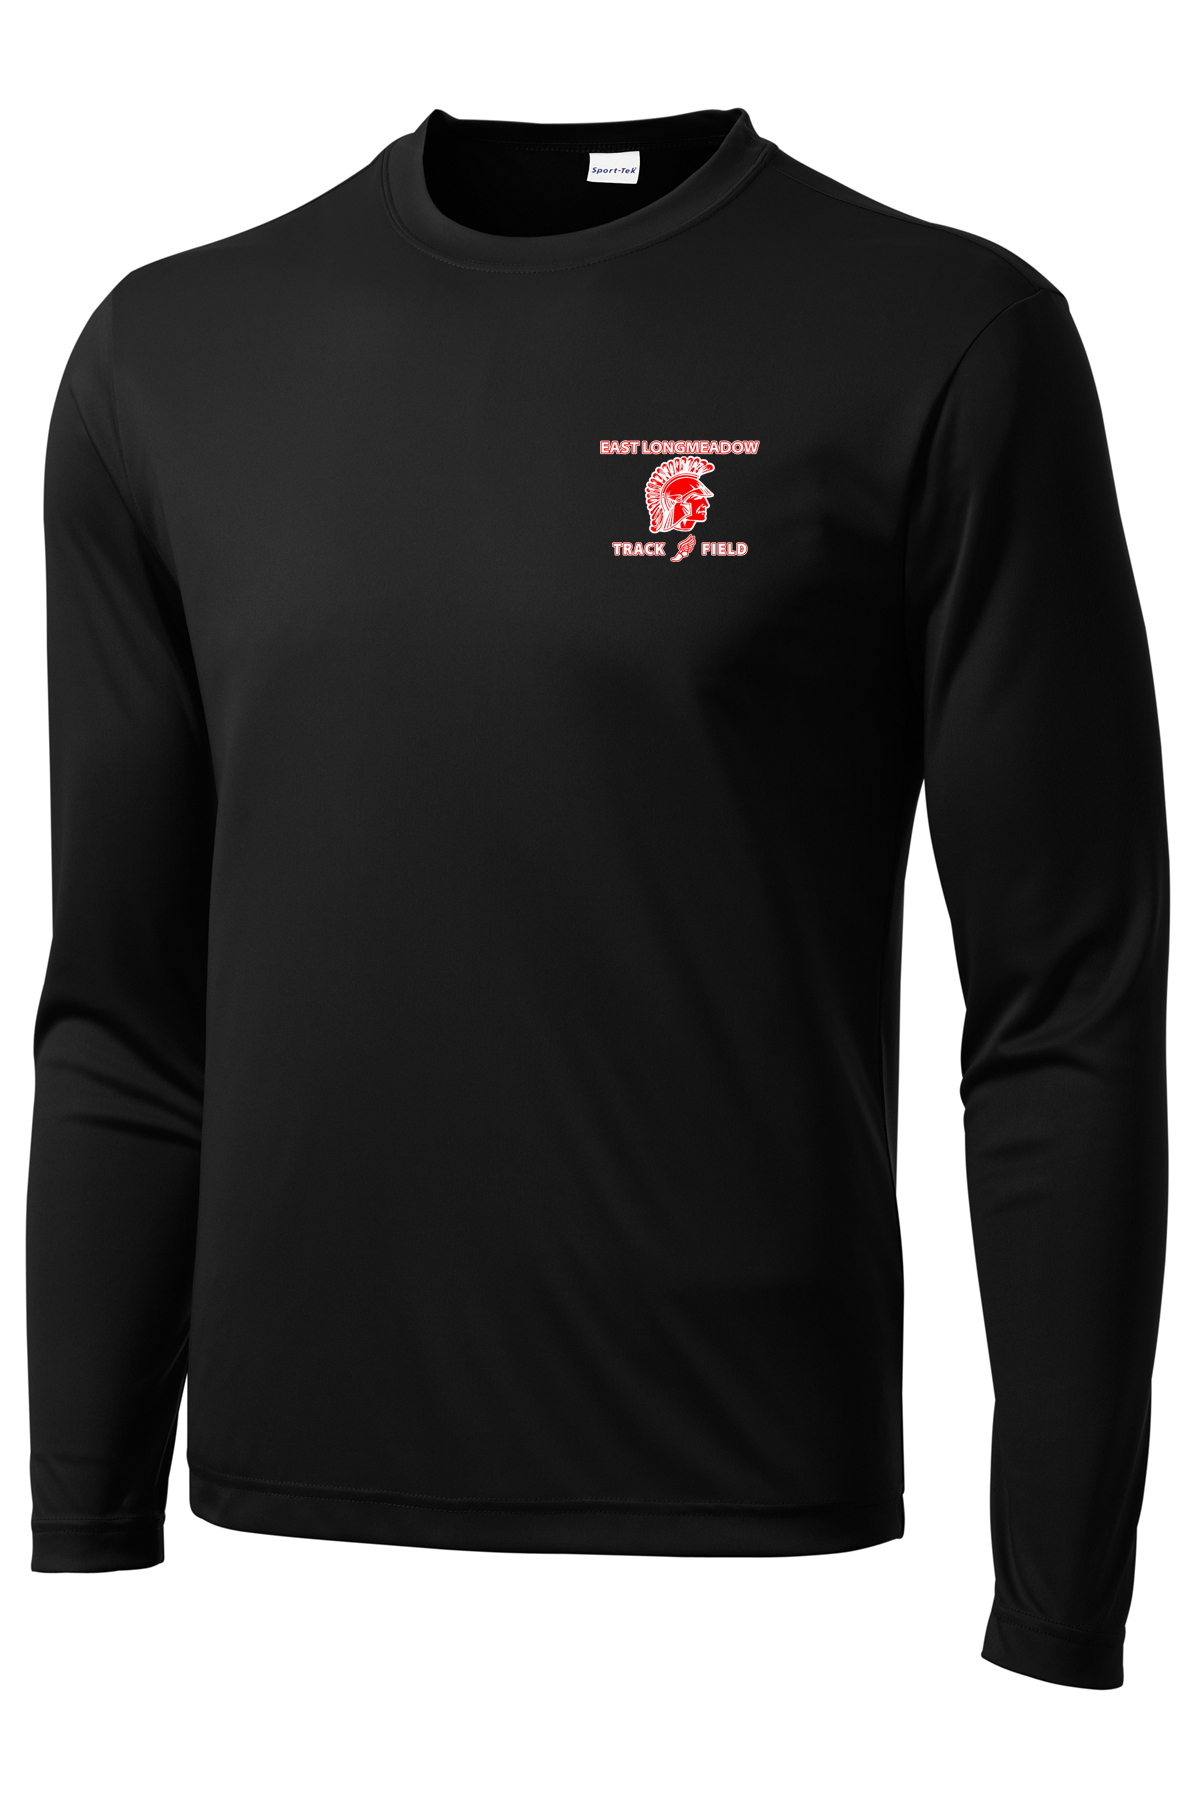 East Longmeadow Track and Field Black Long Sleeve Performance Shirt